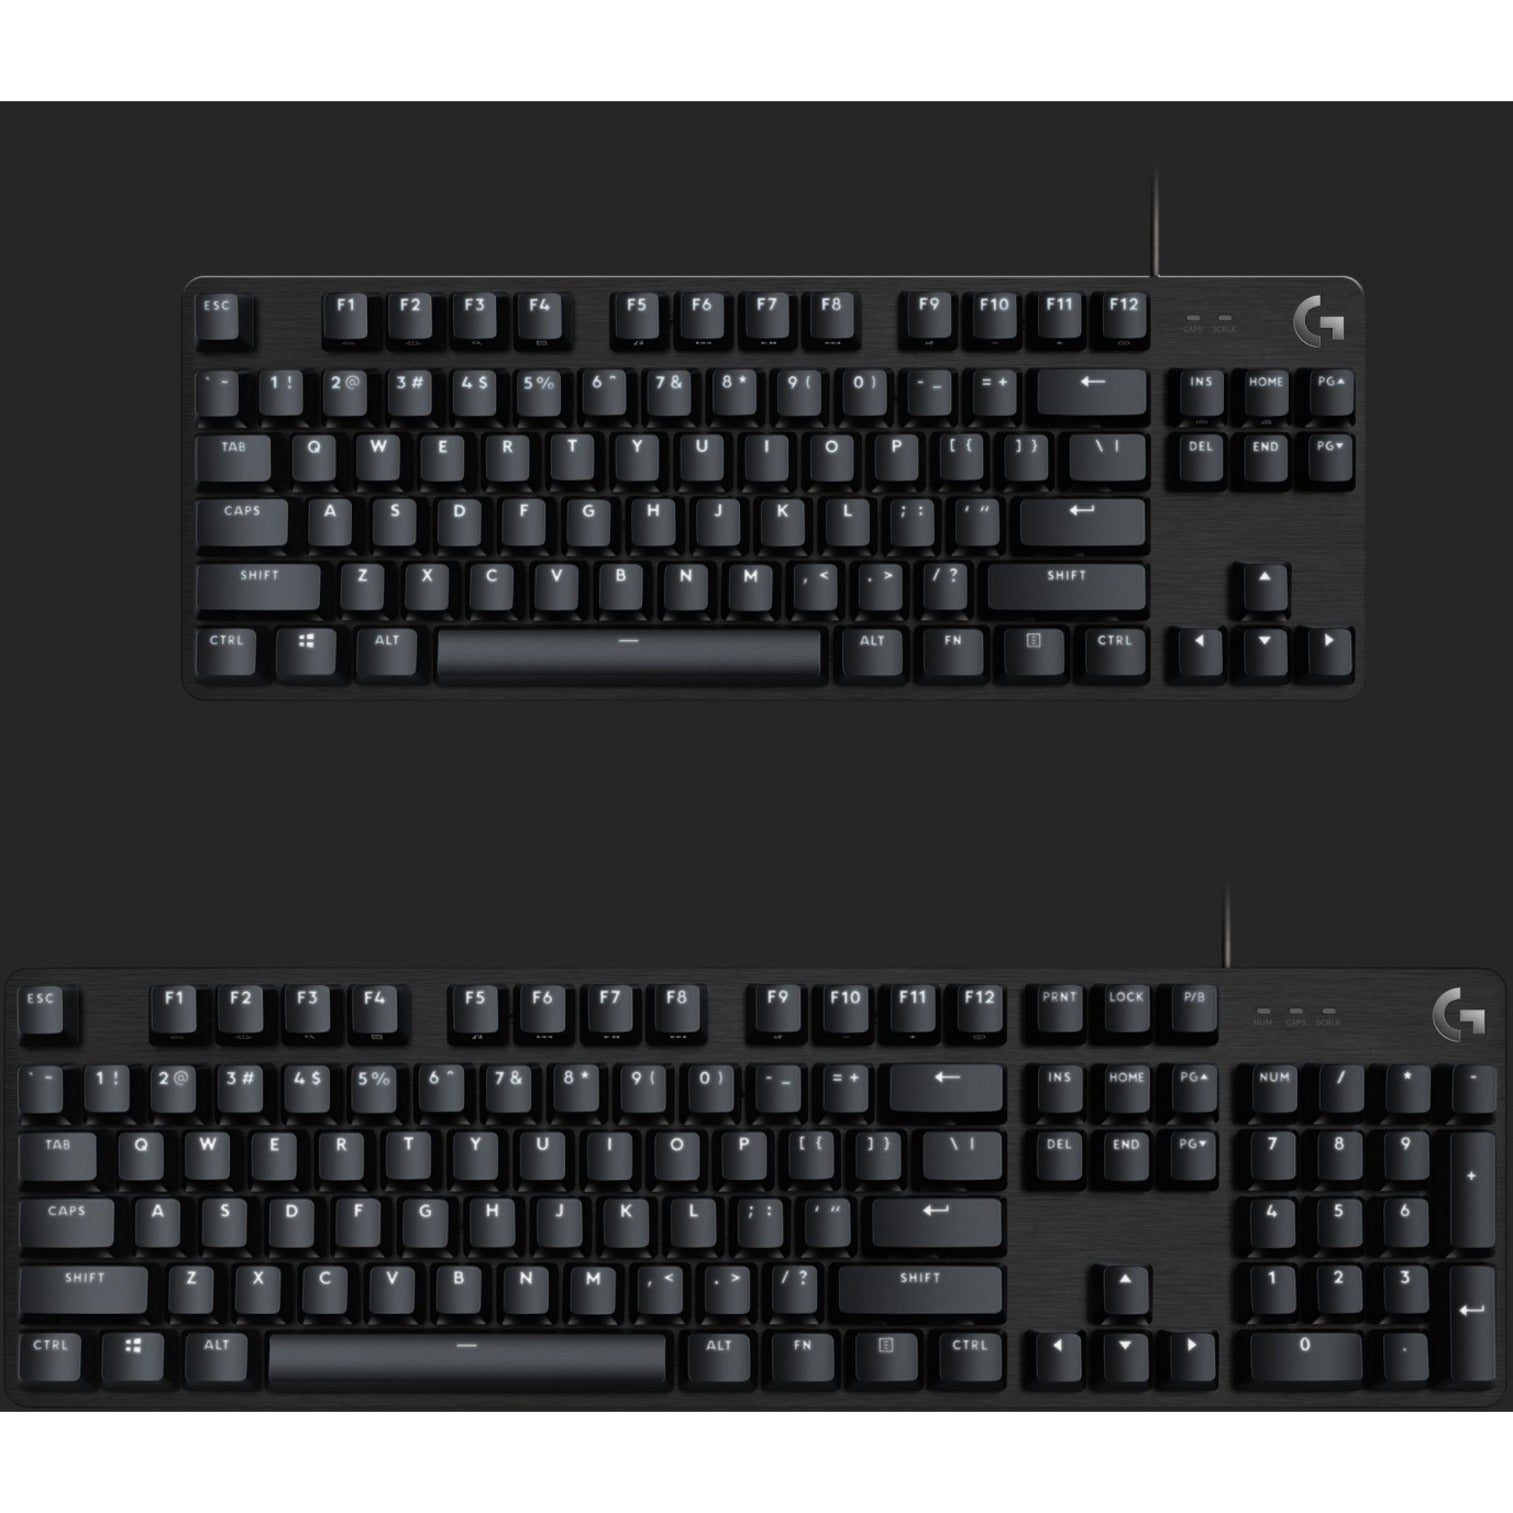 Logitech 920-010433 G413 SE Mechanical Gaming Keyboard, Backlit LED, Full-size, Anti-ghosting